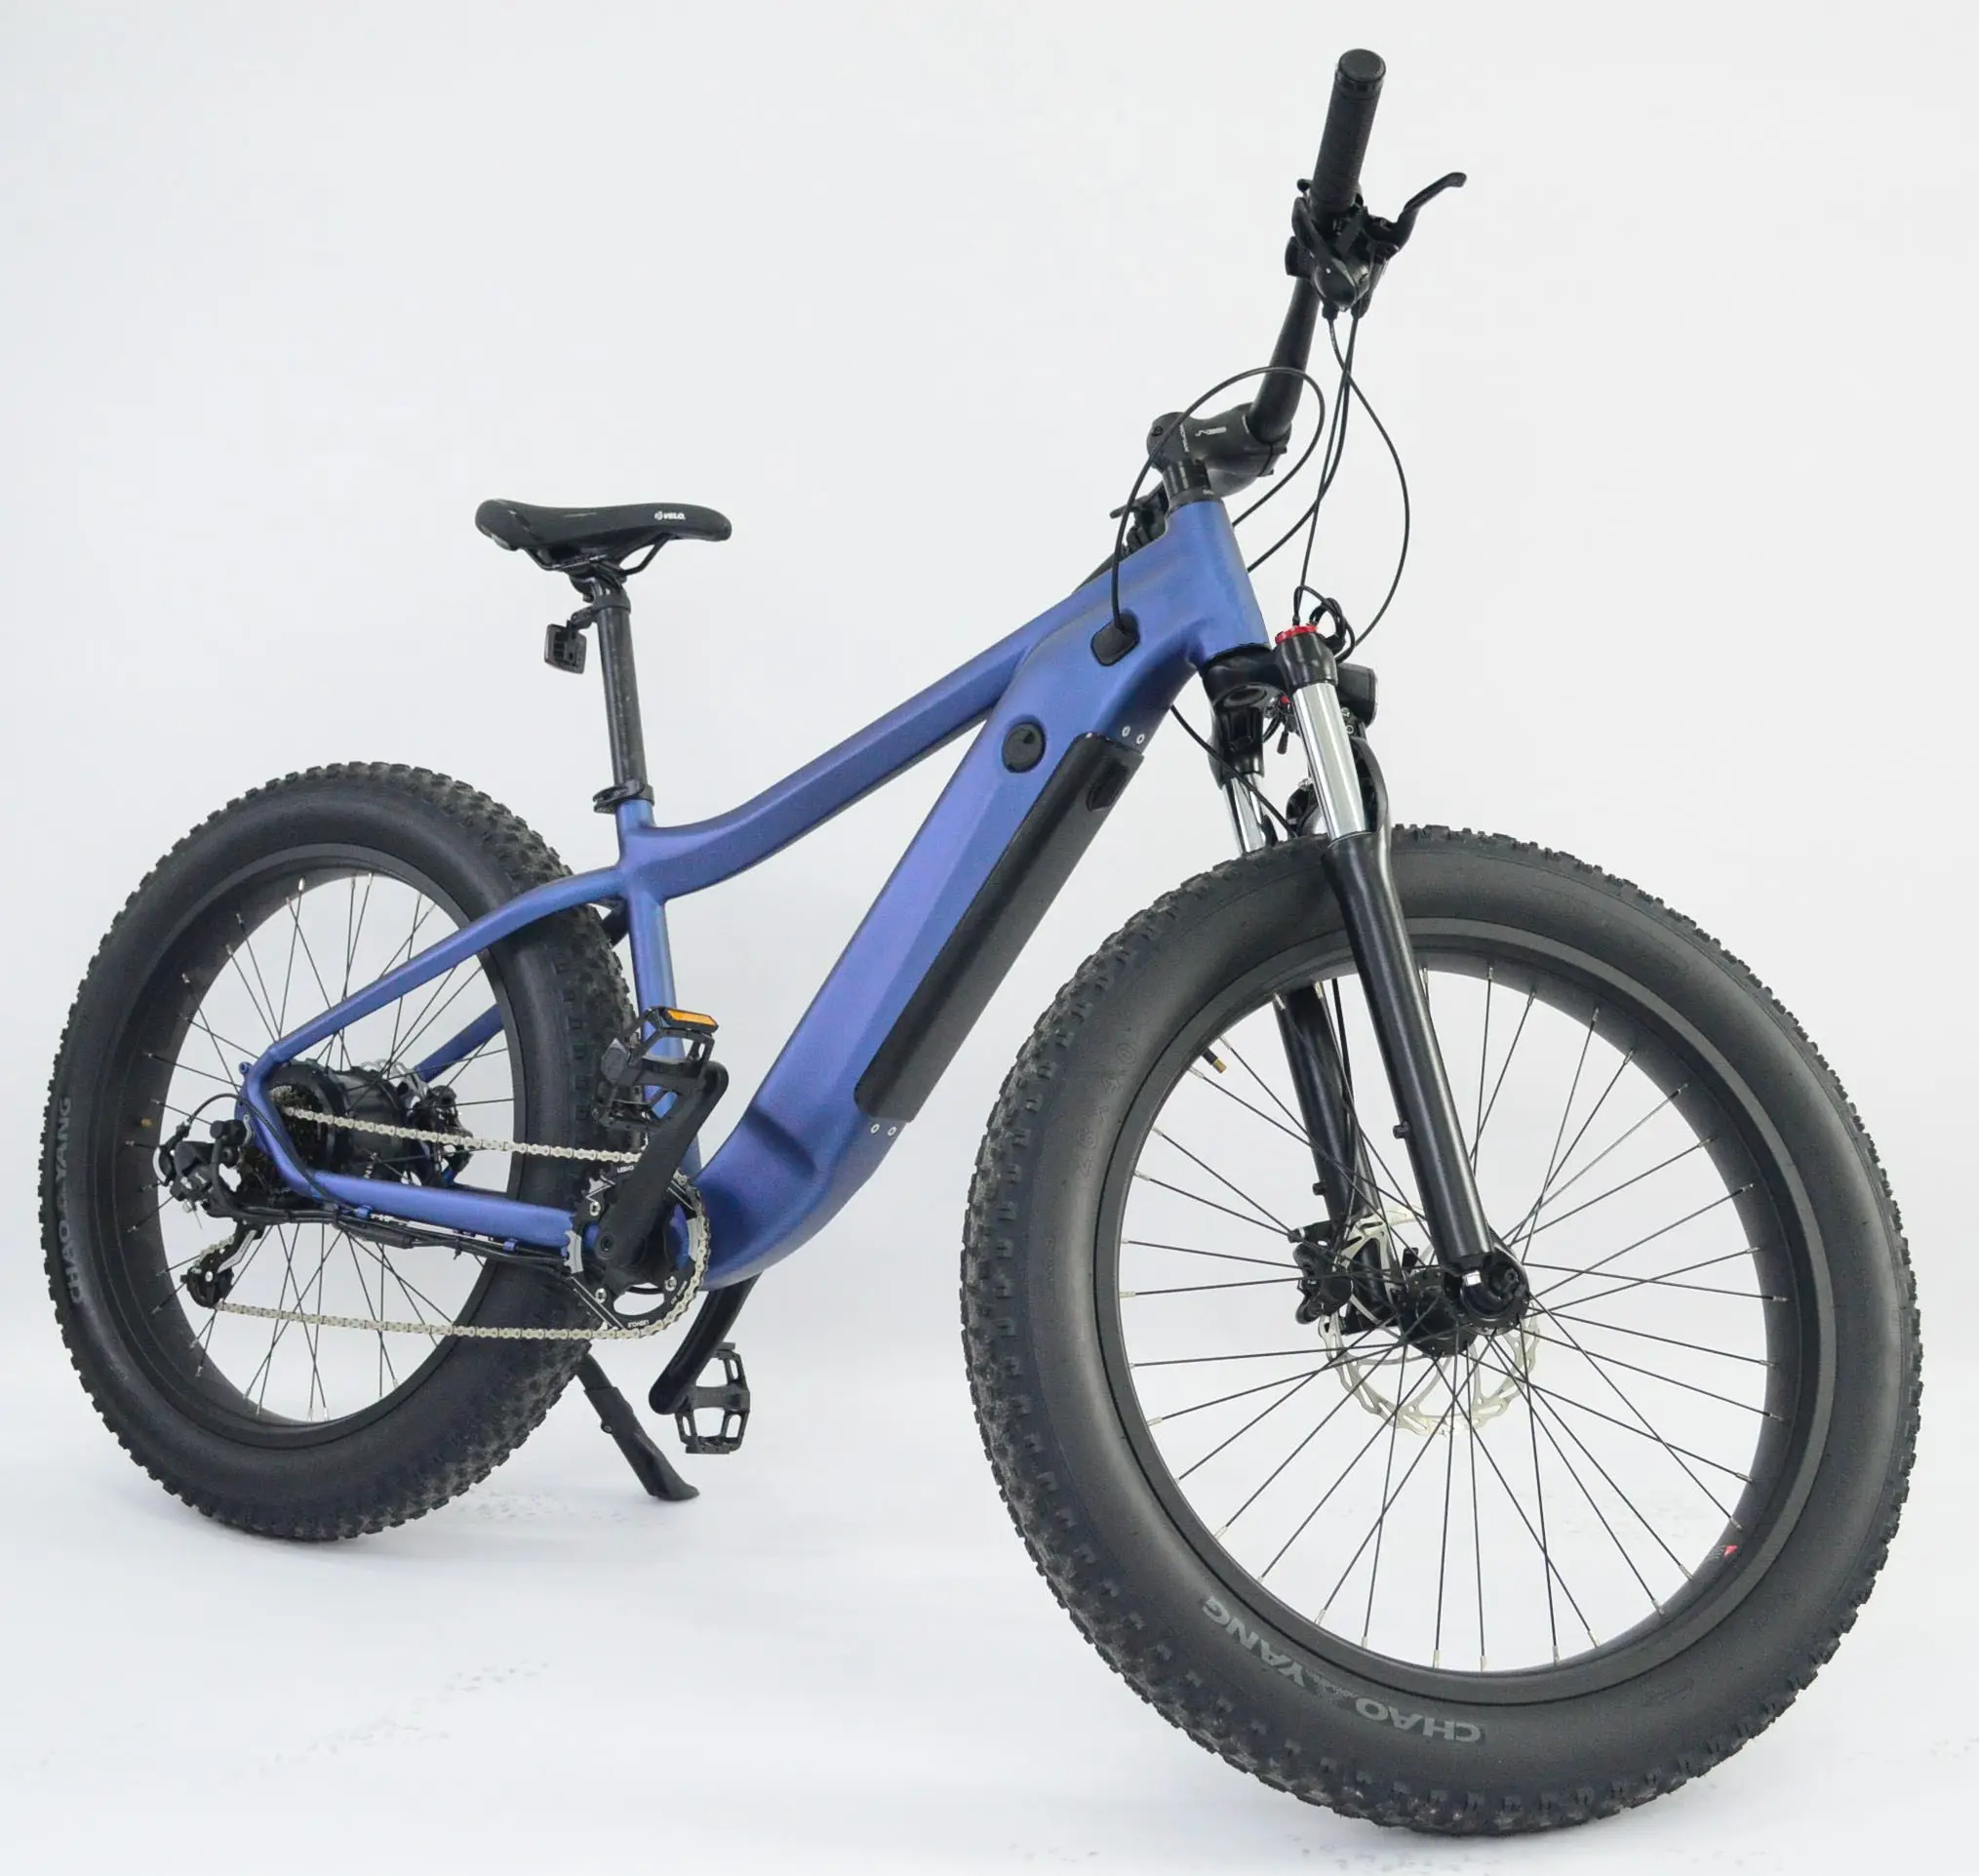 Moda E Cool 26 polegadas Motor Bicicleta Elétrica MTD Suspensão Completa Display LCD Bafang E bicicleta Montanha Bicicleta Elétrica Para O Homem